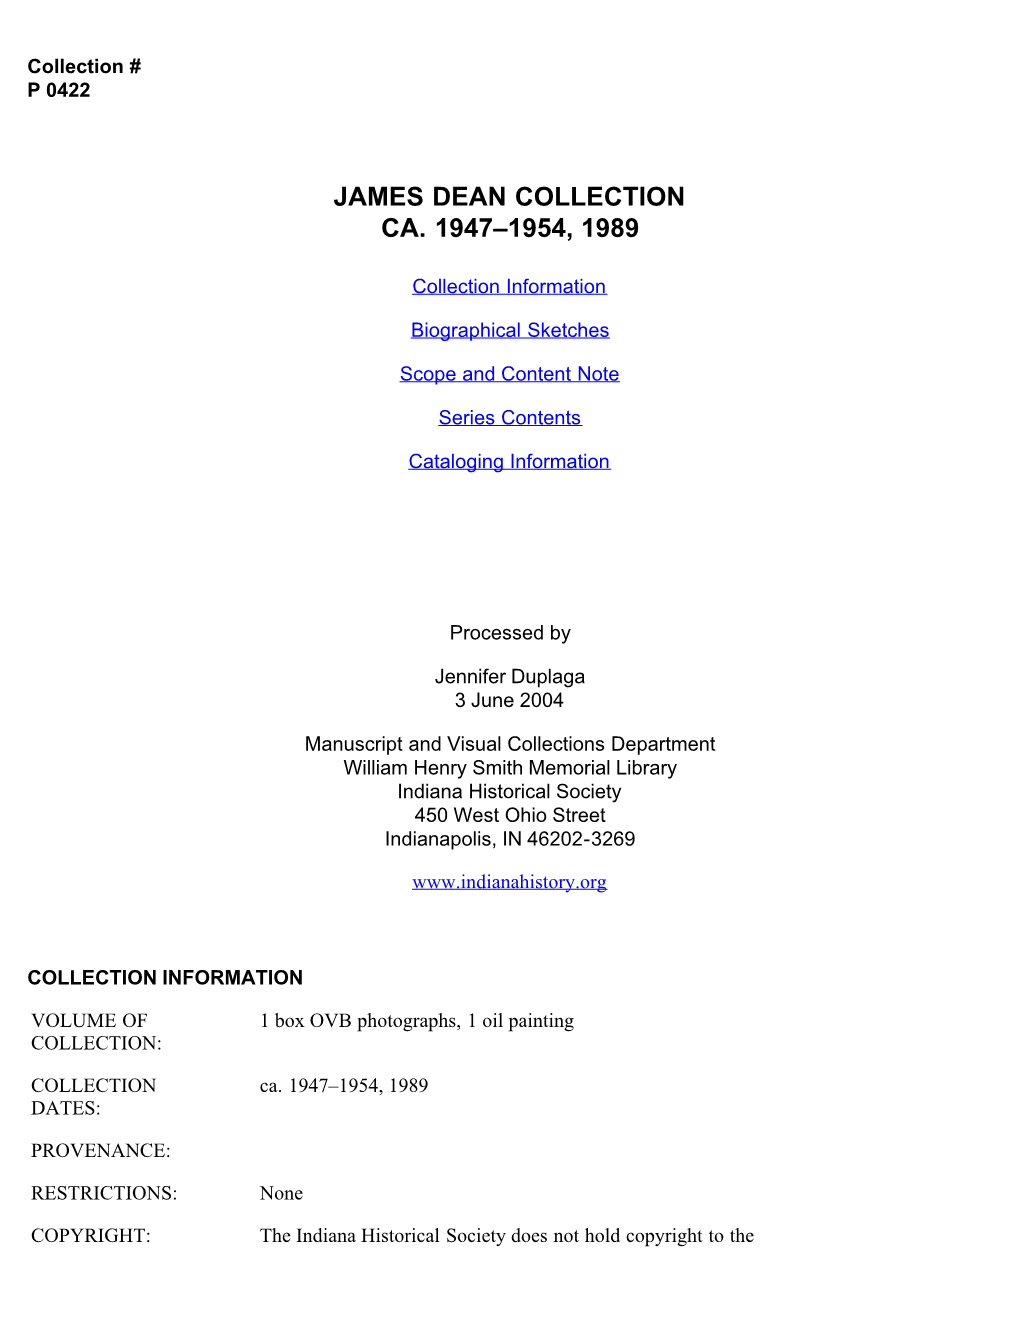 James Dean Collection Ca. 1947-1954, 1989